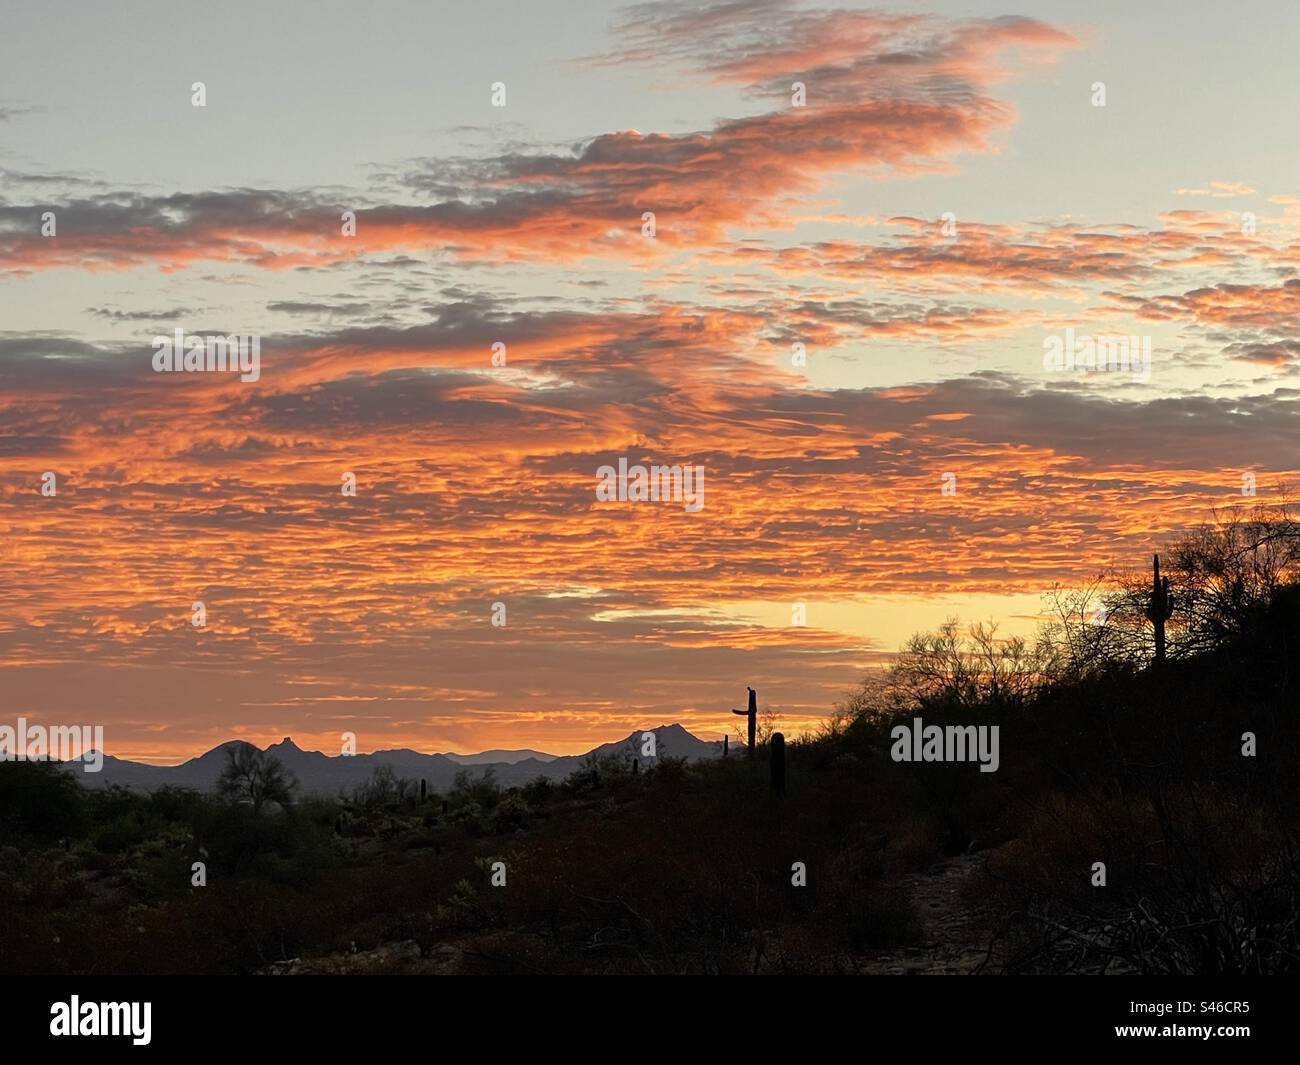 Arizona flaming orange sunrise, McDowell mountains, view from 40th Street trailhead, Phoenix Mountains Preserve, Saguaro silhouettes Stock Photo